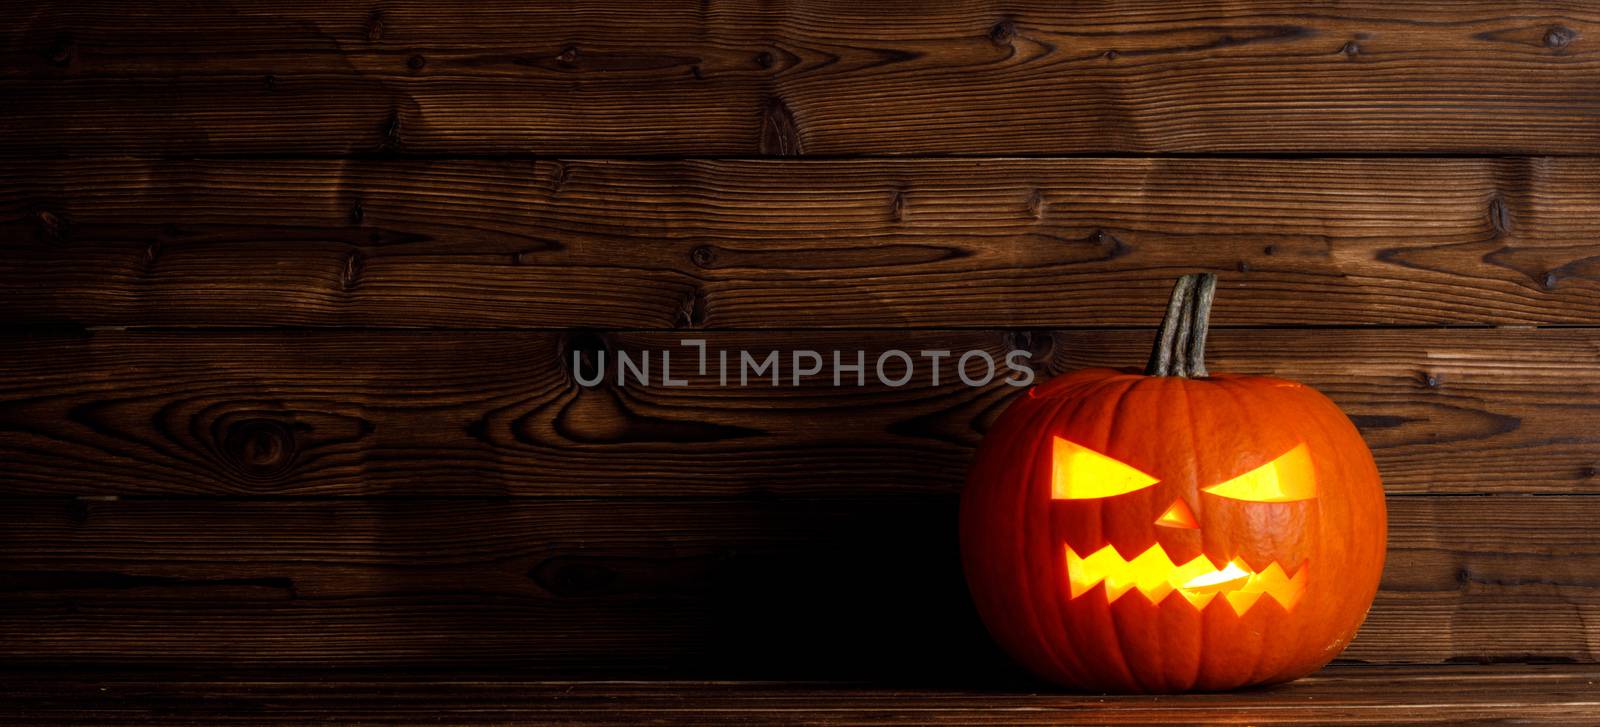 Glowing Halloween pumpkin head jack lantern on wooden background